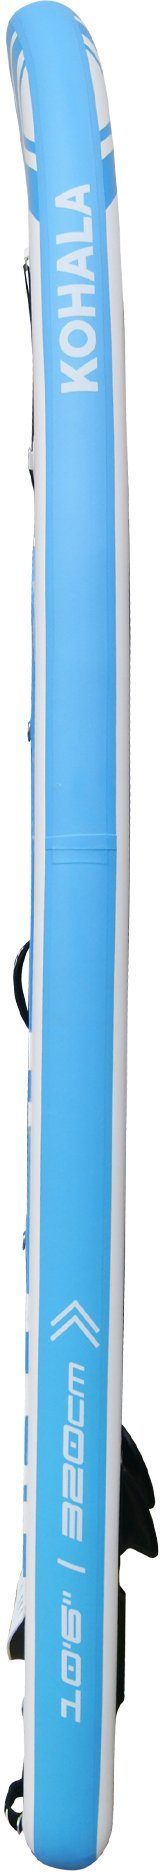 Kohala, weiß/blau KOHALA (6 tlg) SUP-Board Inflatable